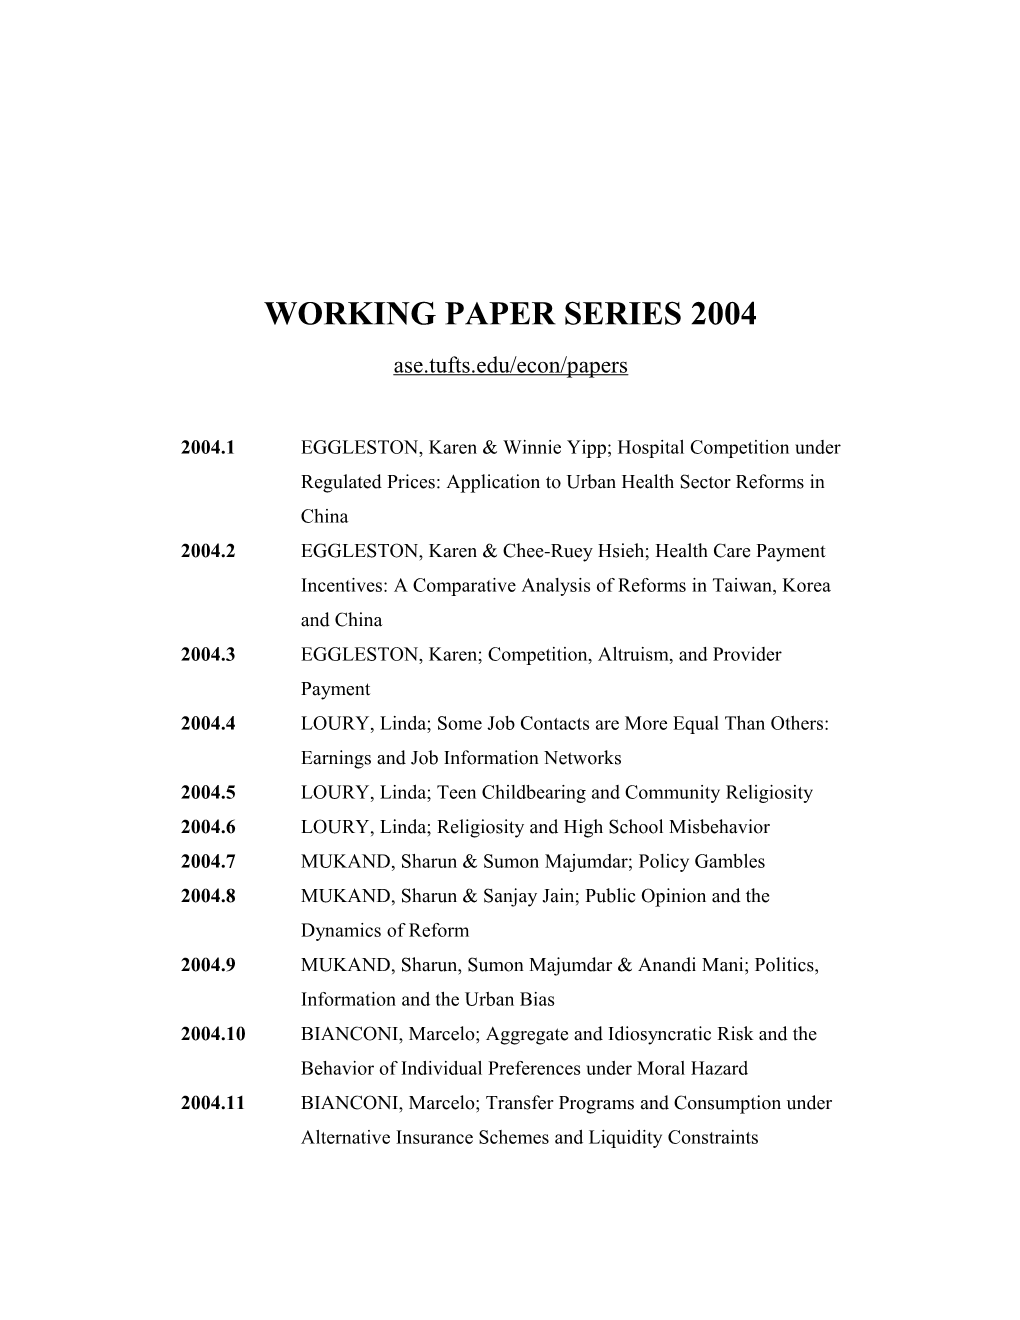 Working Paper Series 2001